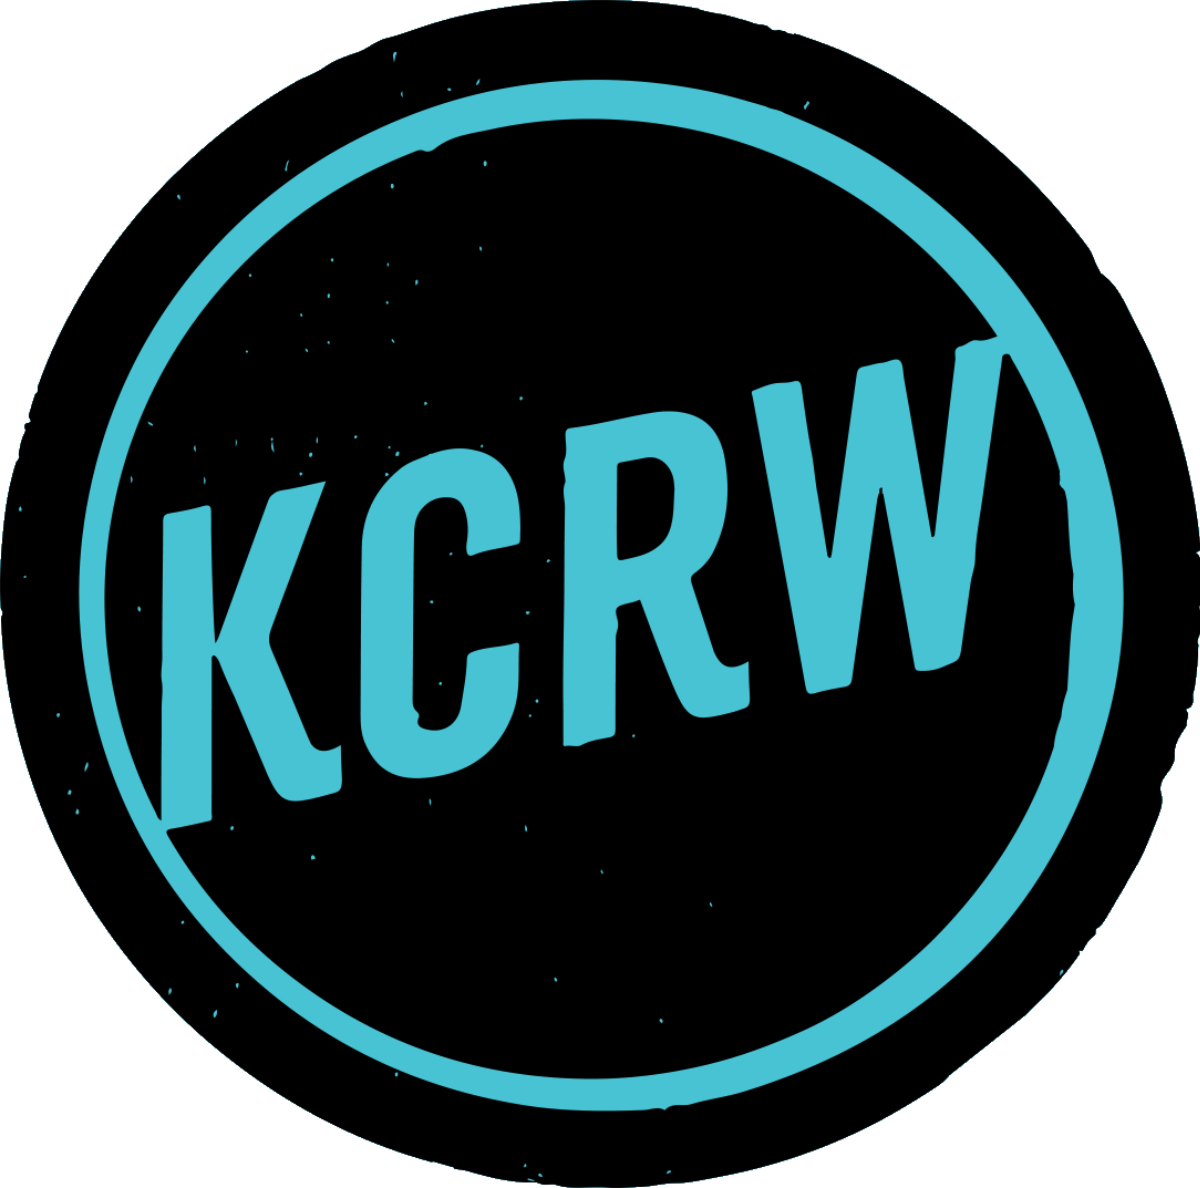 KCRW_89.9FM_logo.svg.png